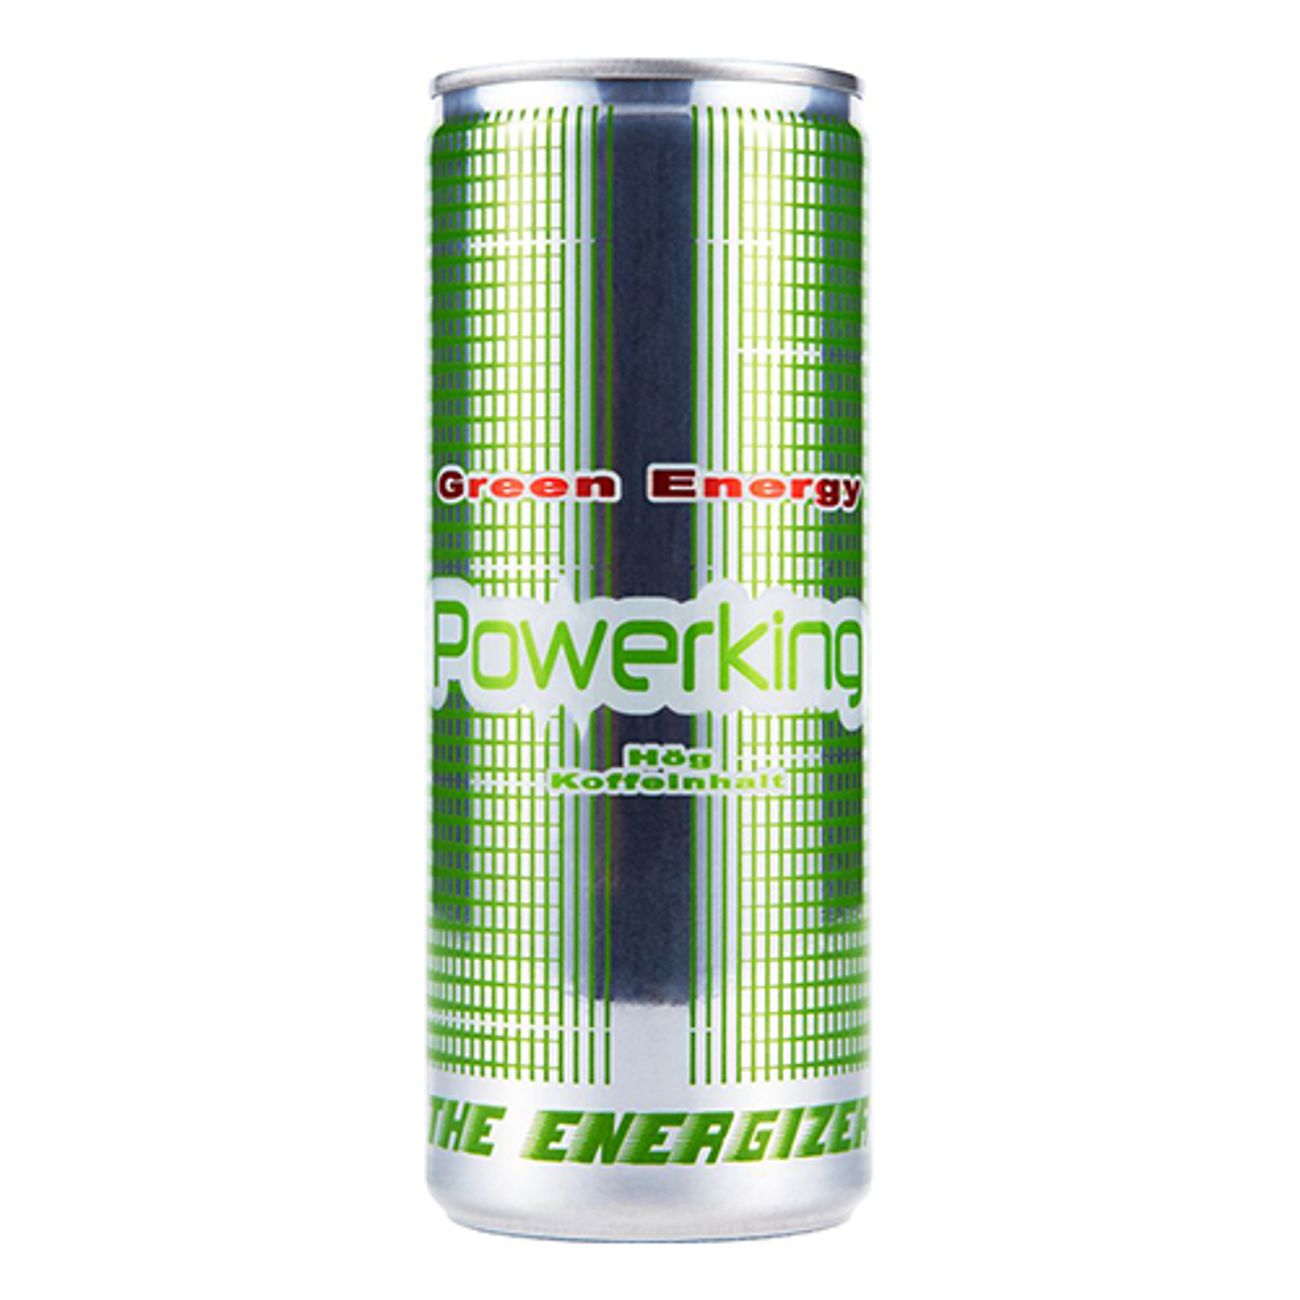 powerking-green-energy-1